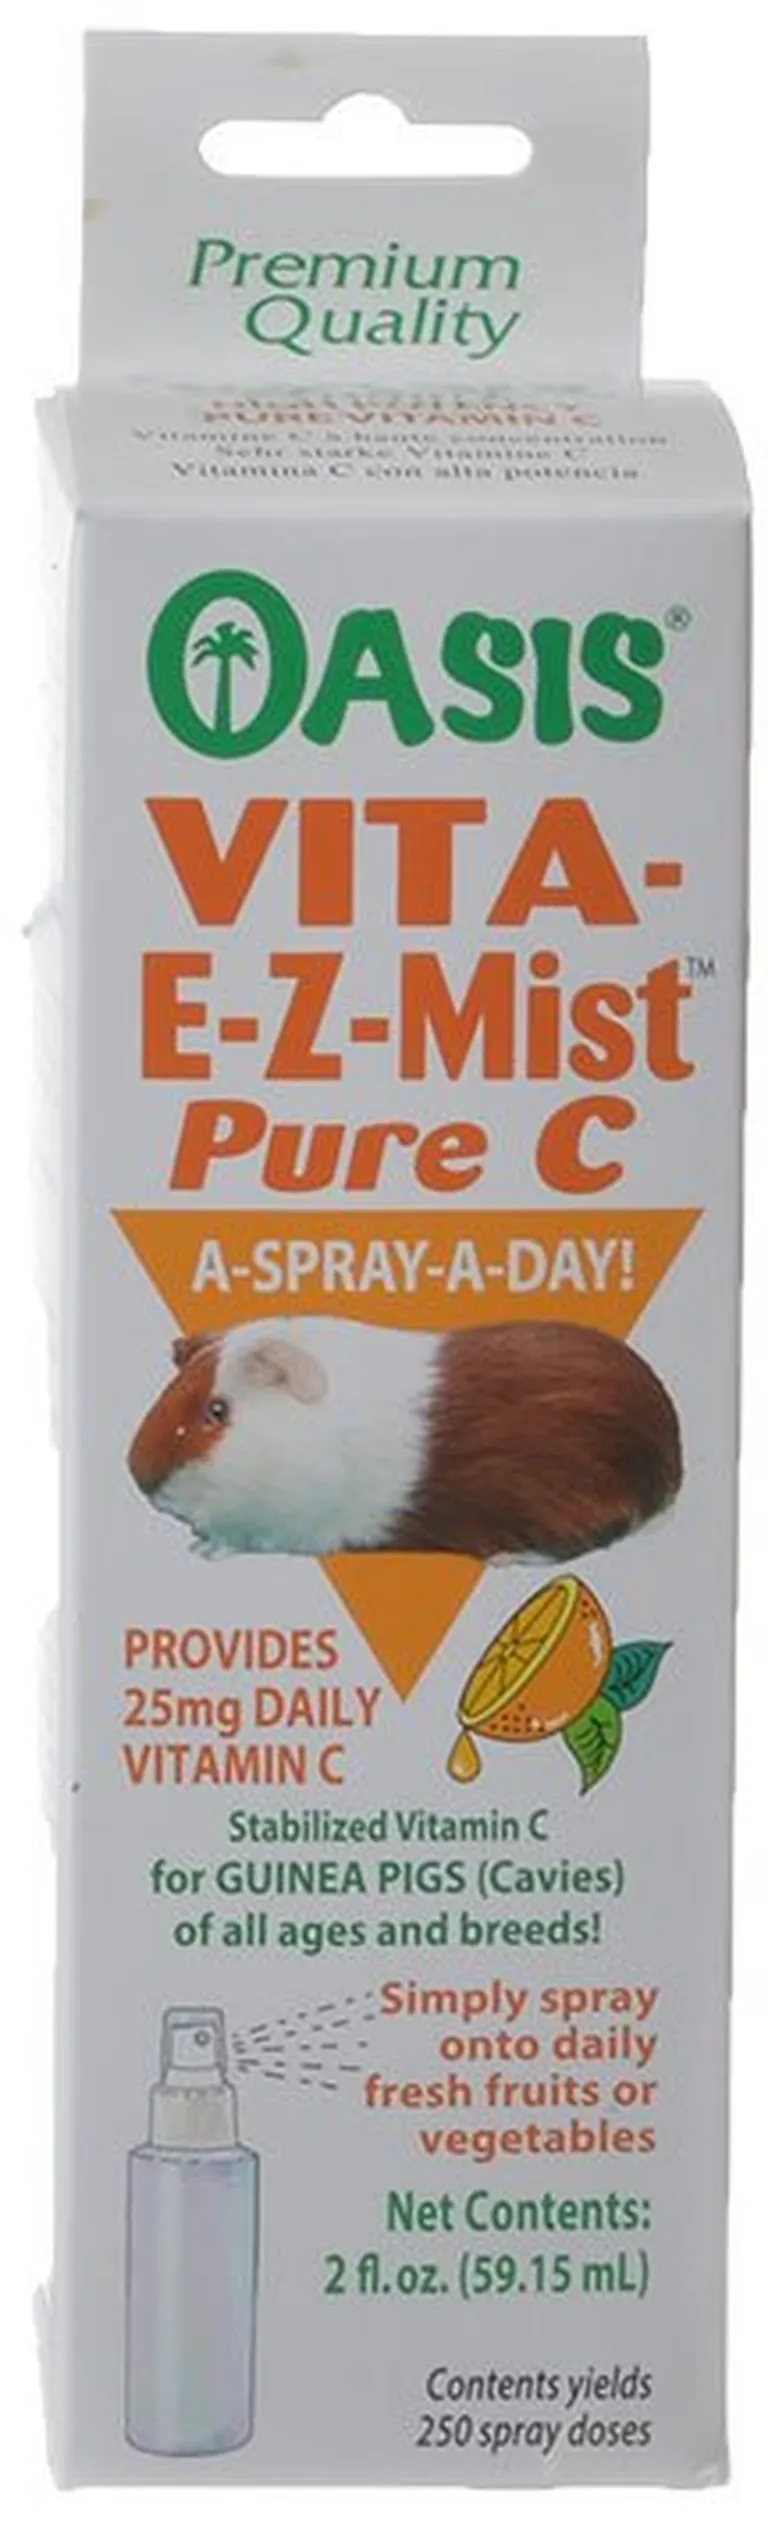 Oasis Vita E-Z-Mist Pure C for Guinea Pigs Photo 2